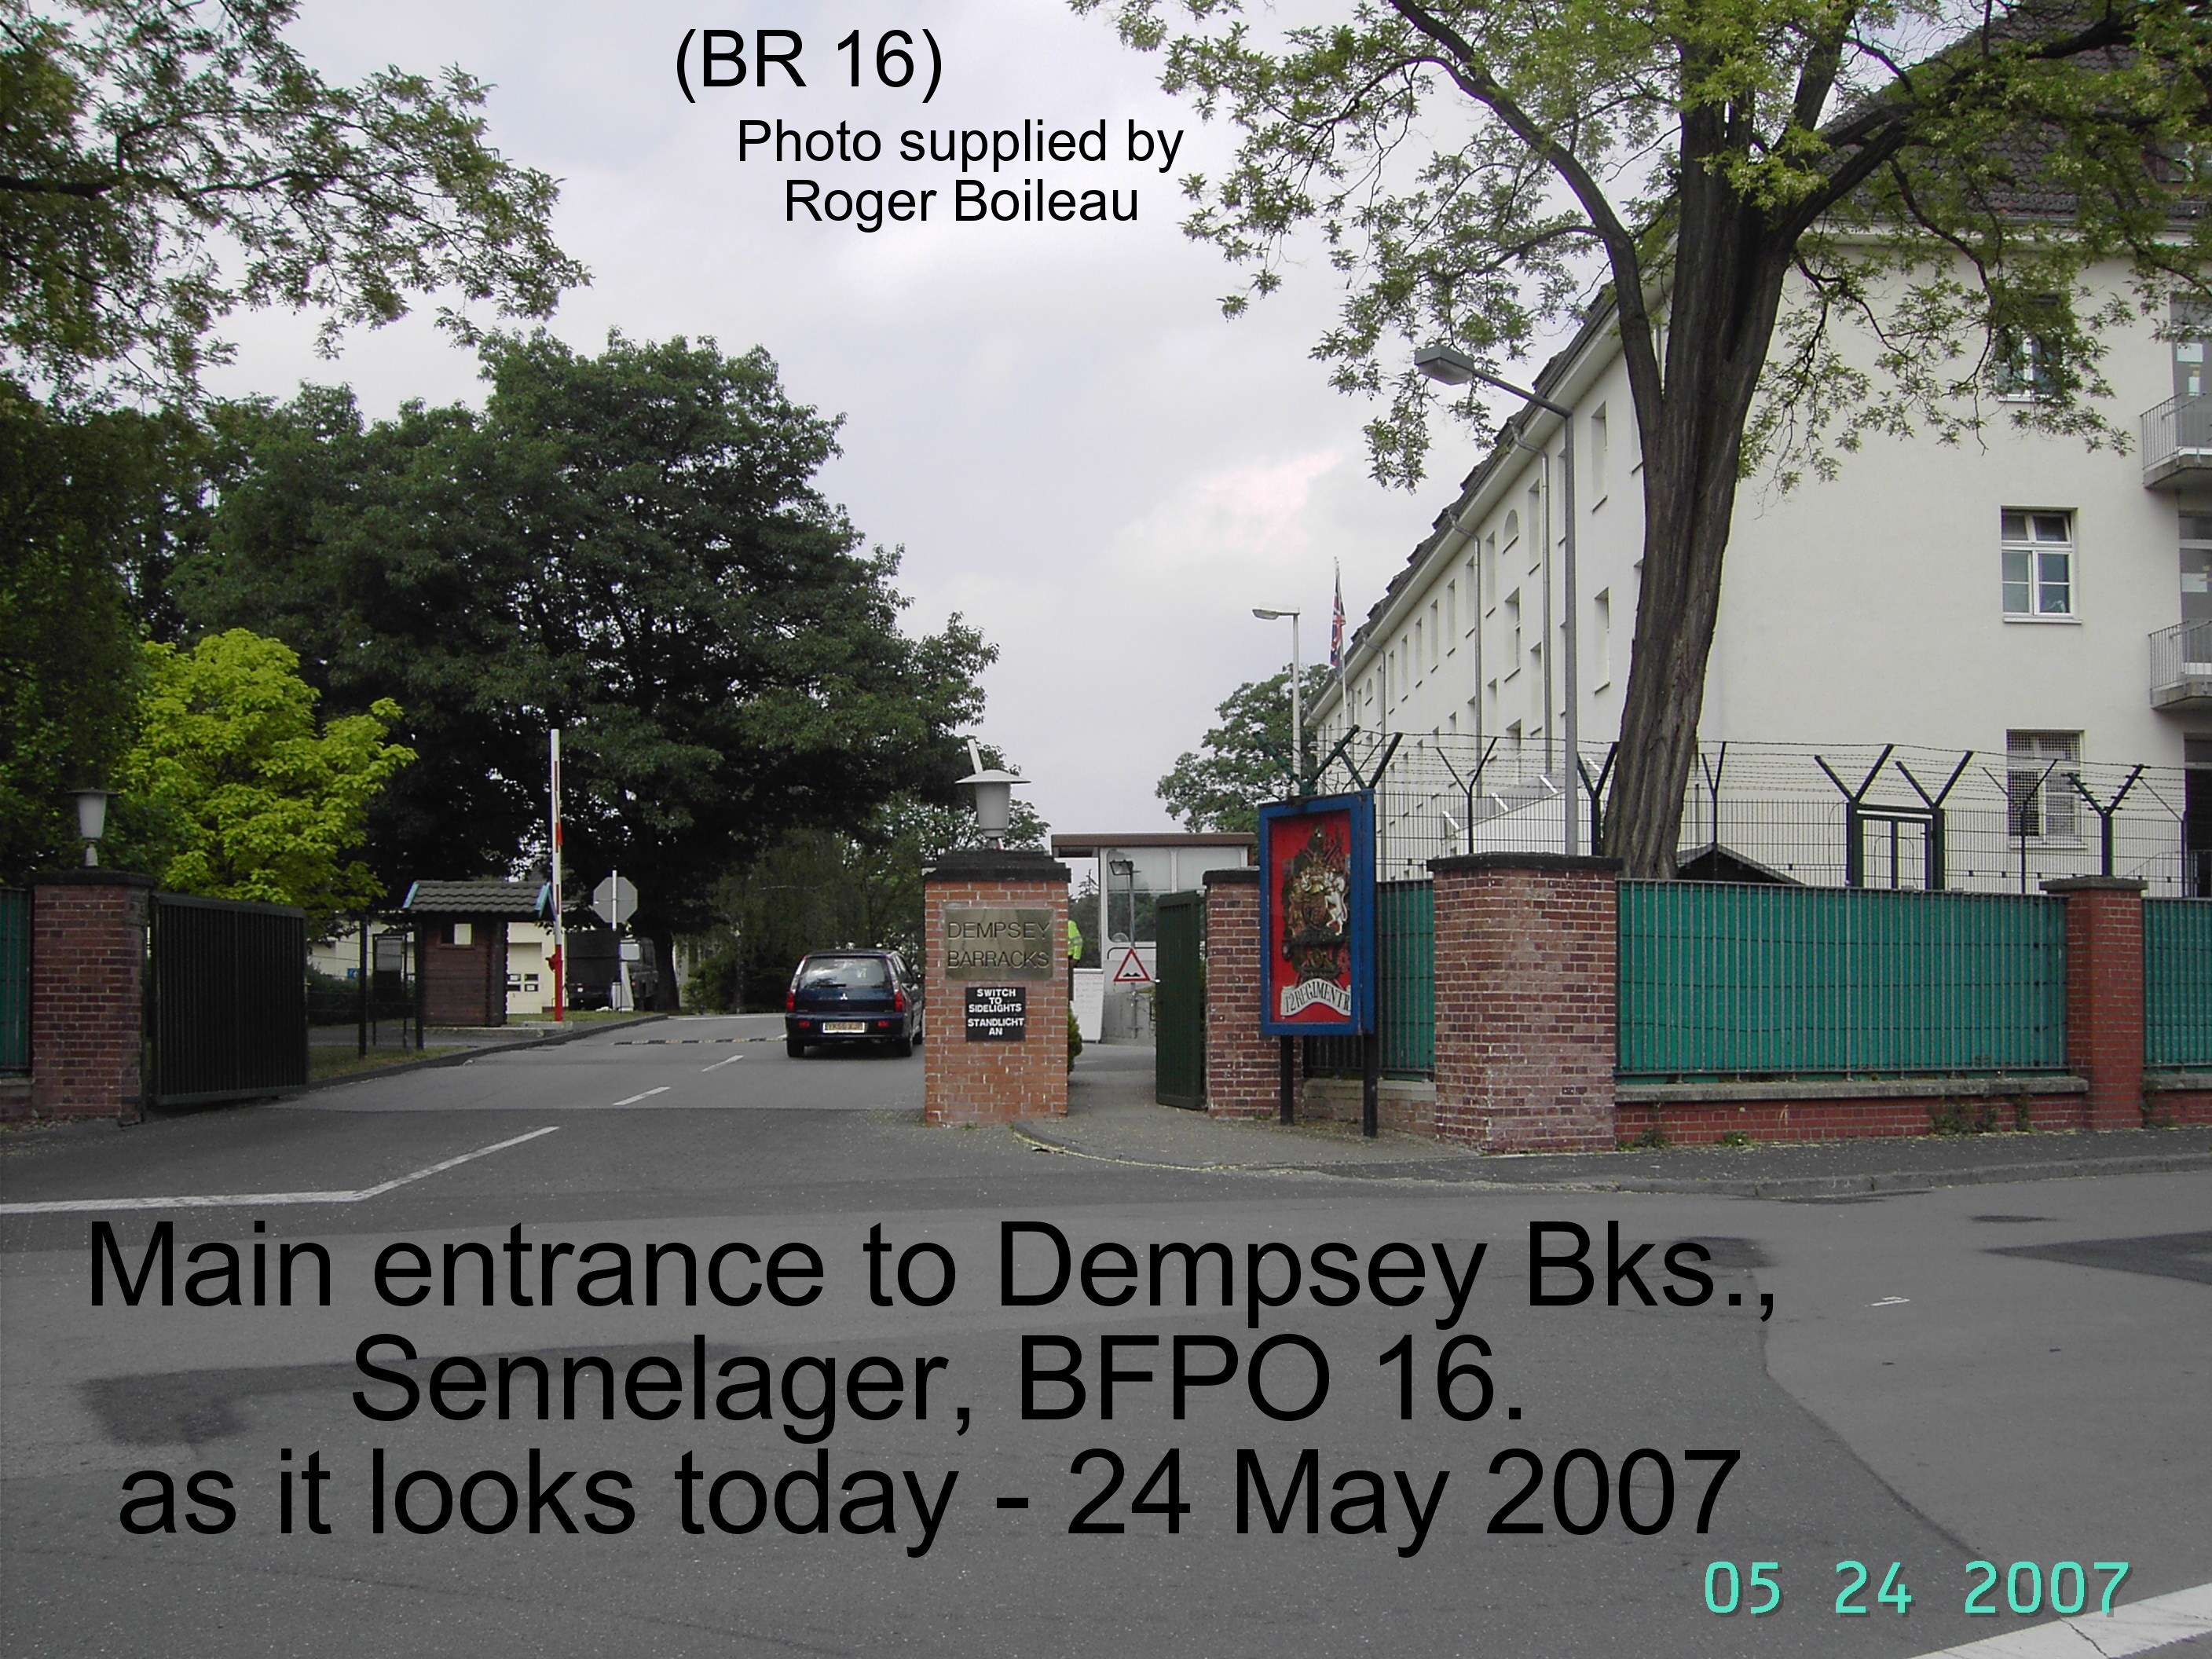 rb-16-main-entrance-to-dempsey-bks.jpg